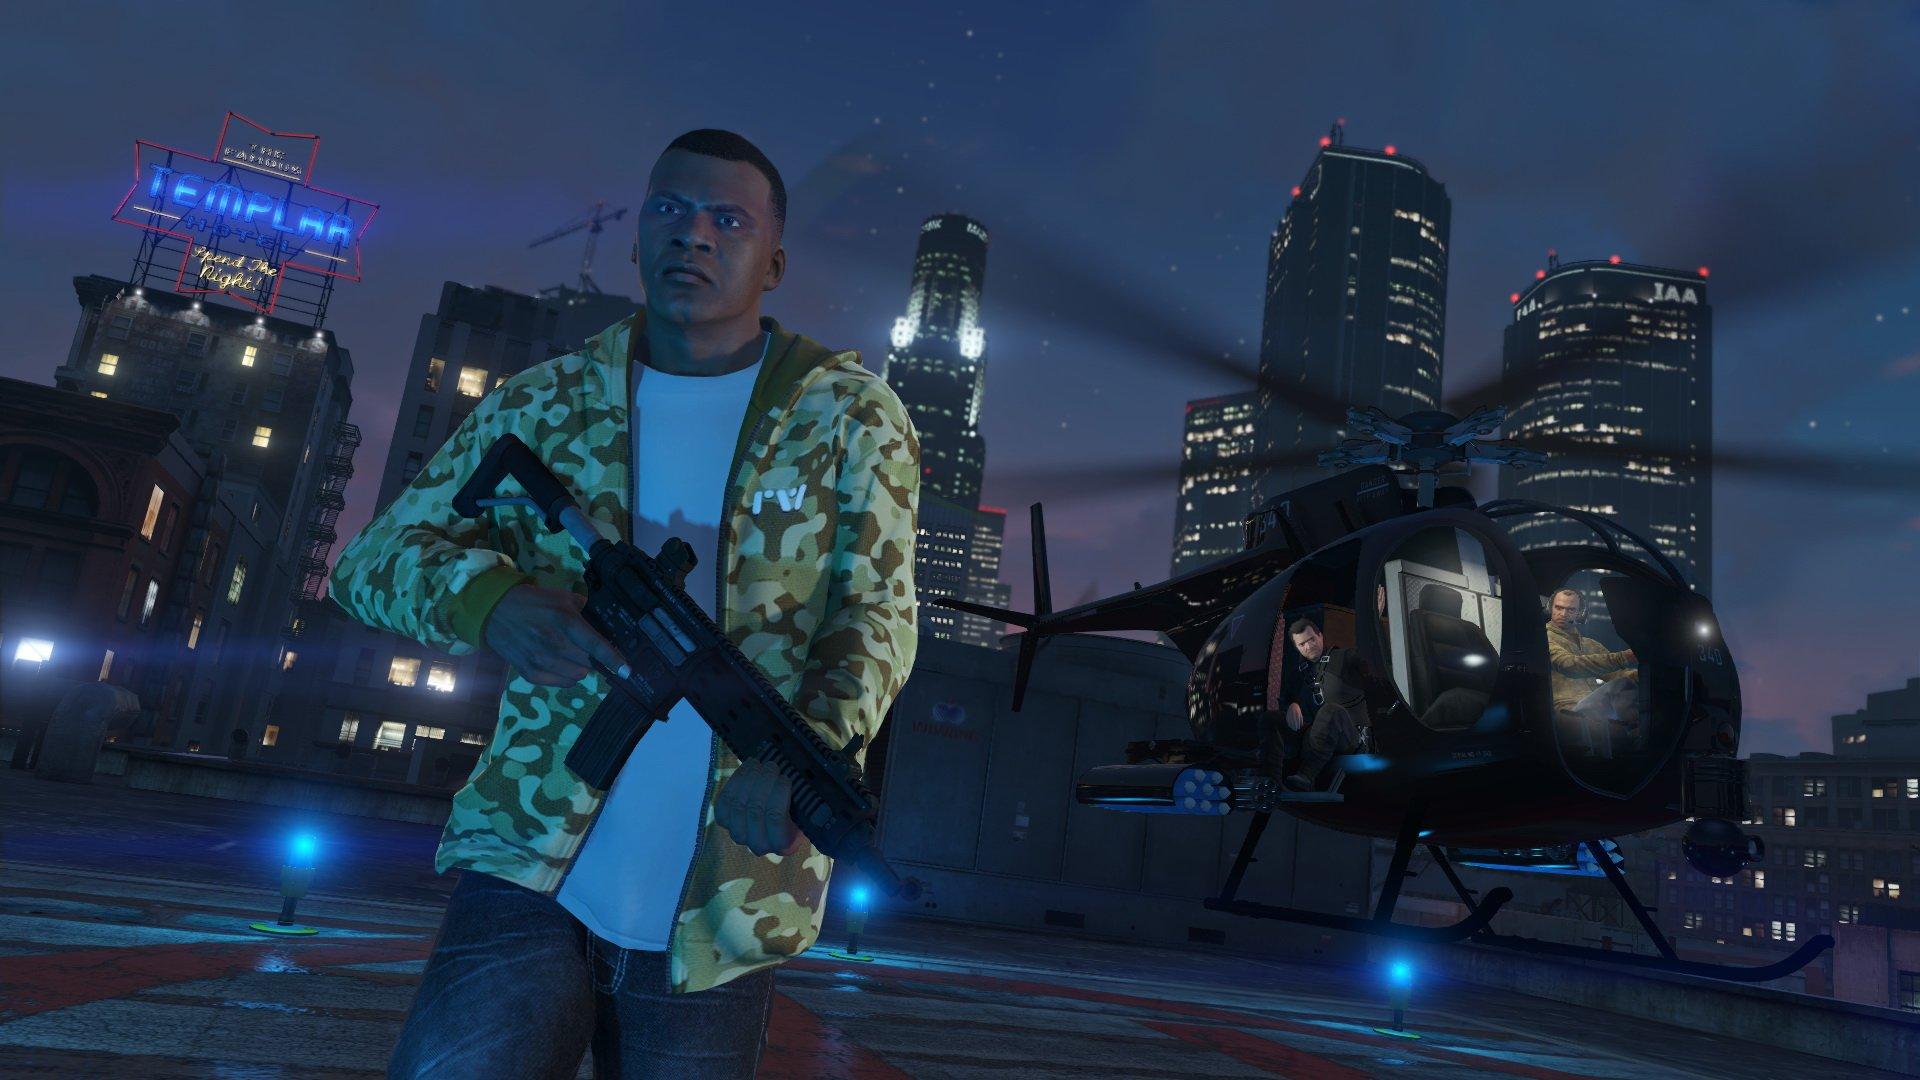 Grand Theft Auto V - GTA 5 - PlayStation 3 - lojarockgames